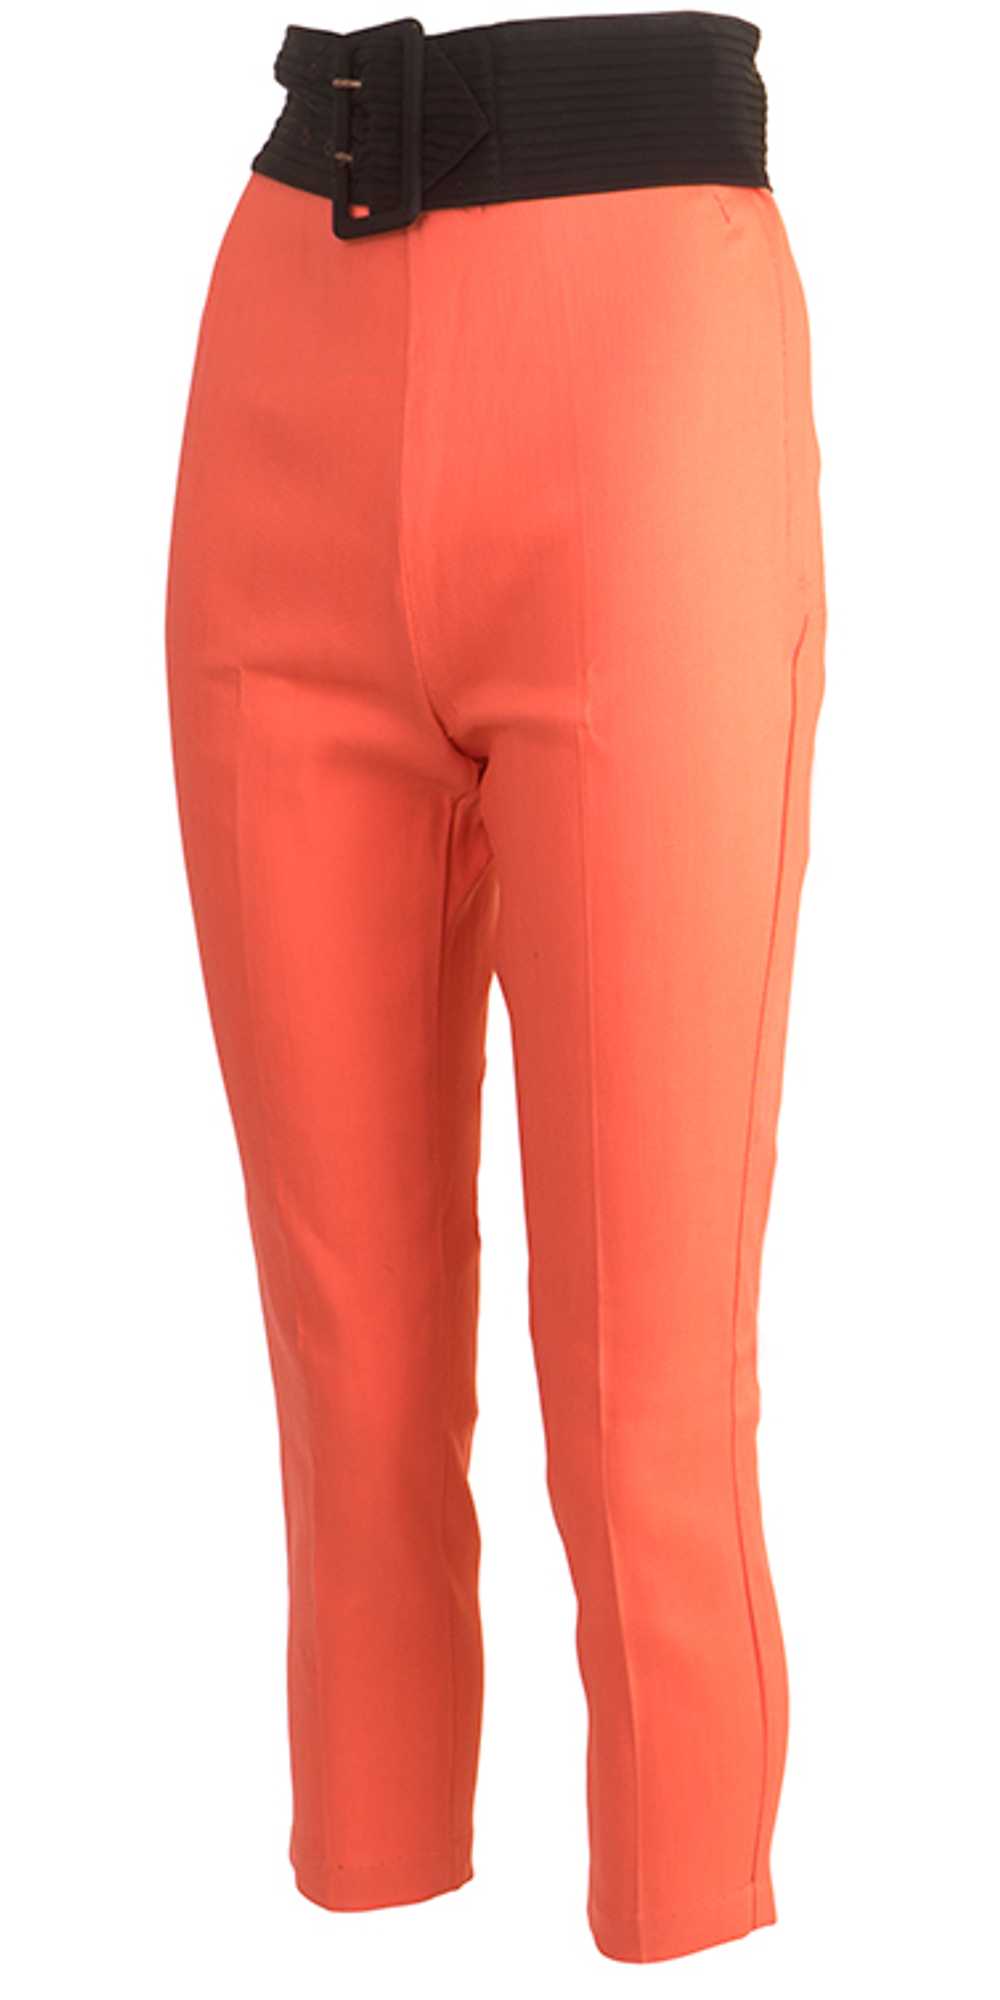 Orange Sherbet 50s Stretch Capris - image 2